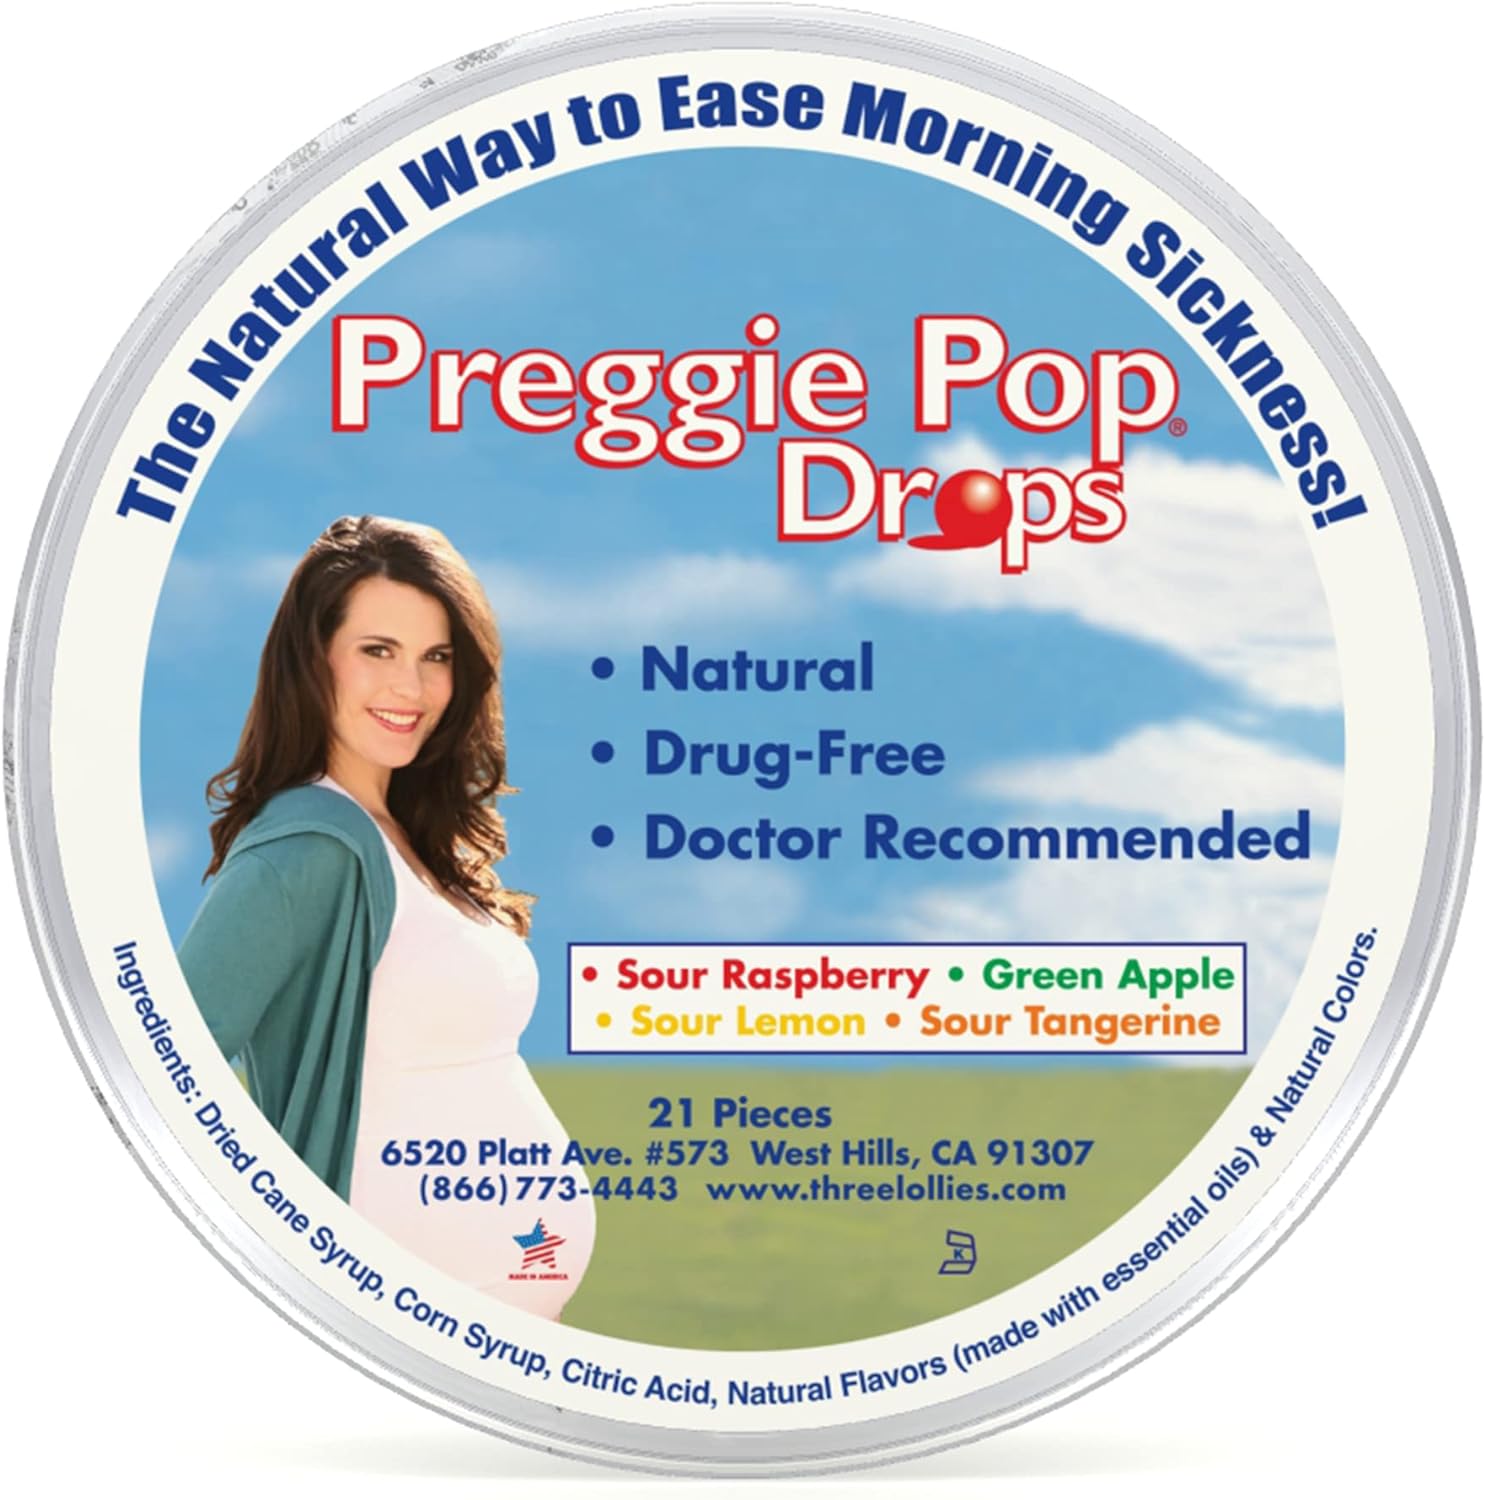 Preggie Pop Drops - 21 Drops - Morning Sickness Relief during pregnancy - Safe for pregnant Mom & Baby - Gluten Free - Four Flavors: Lemon, Raspberry, Green Apple, Tangerine